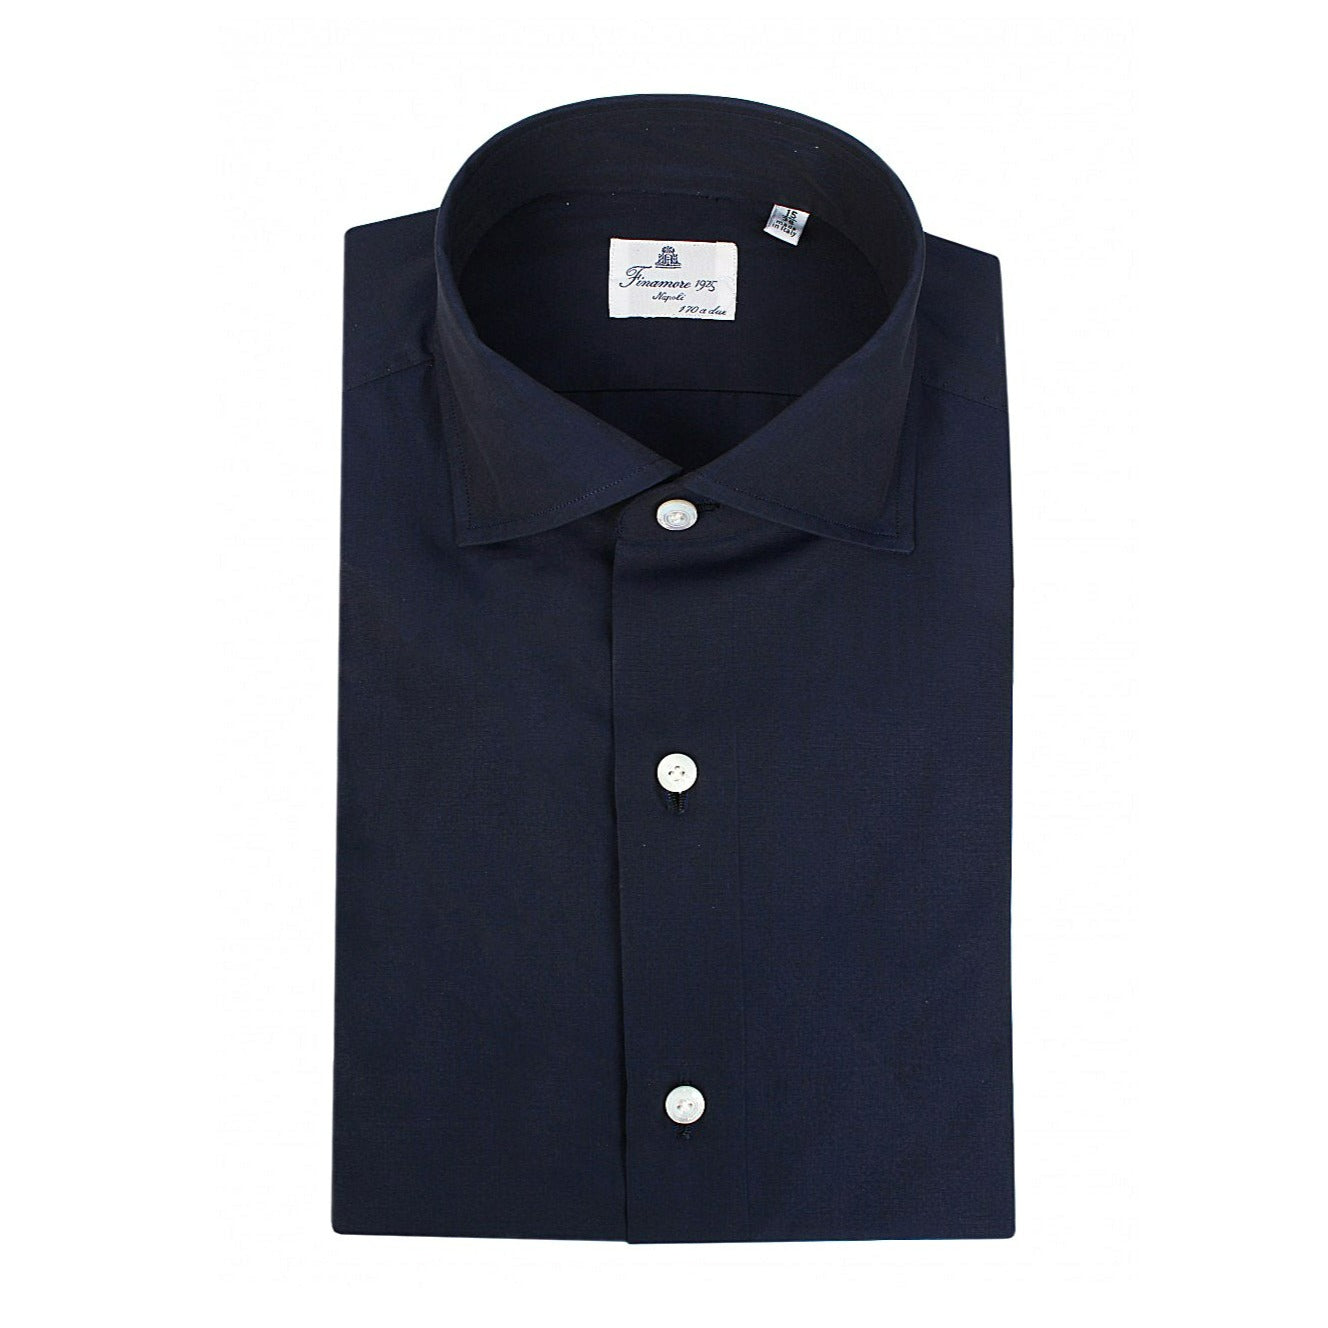 Dress shirt Napoli1 70 a due dark blue fabric Finamore 1925